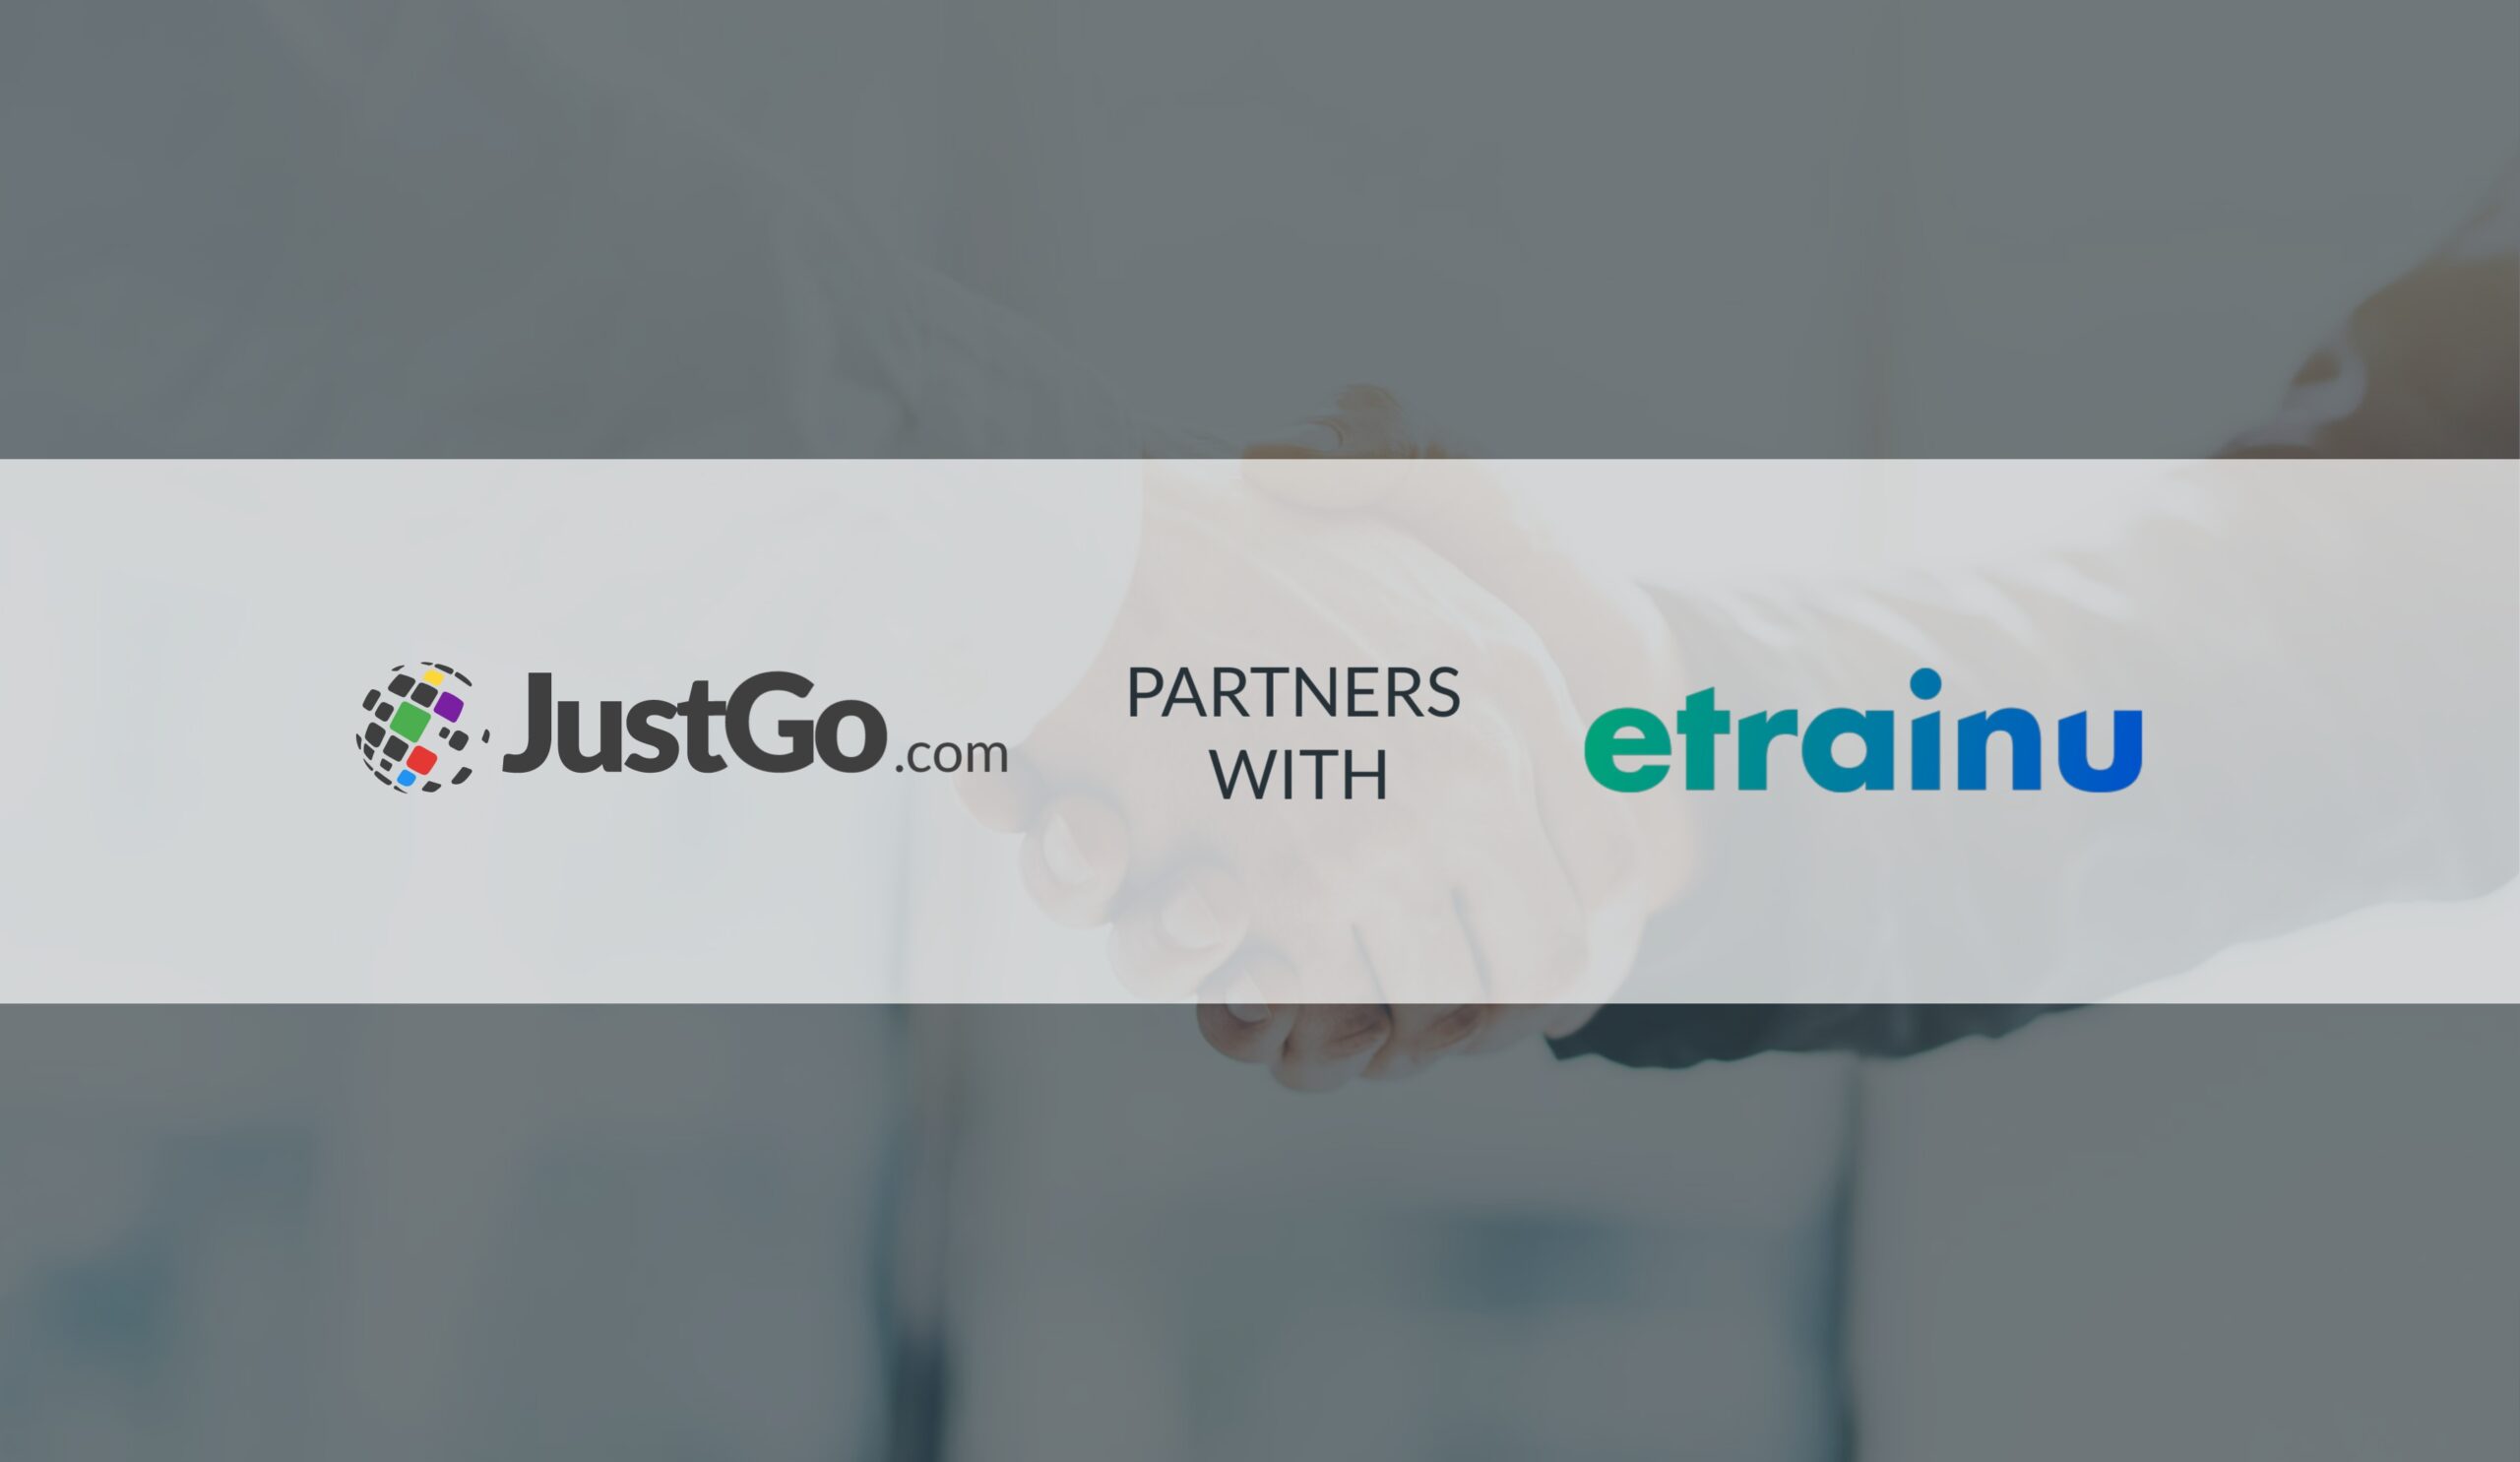 JustG Partners With etrainu